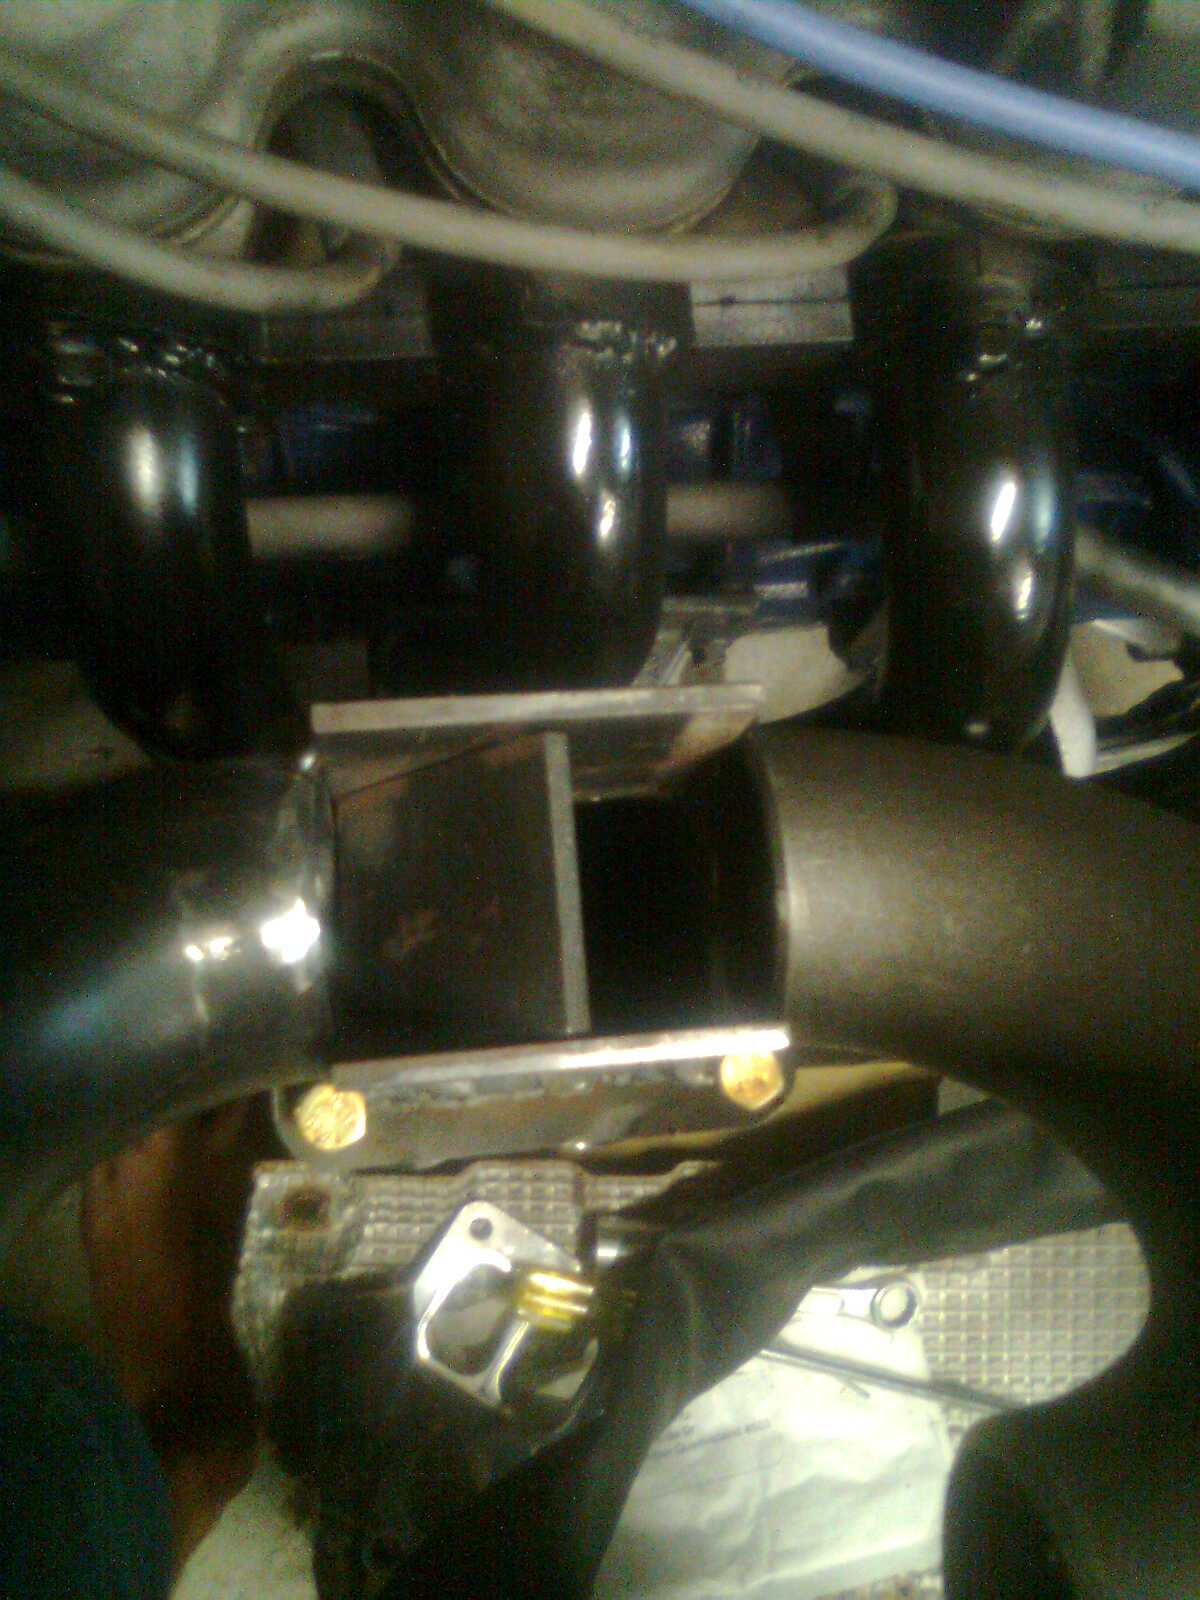 inside the spool valve